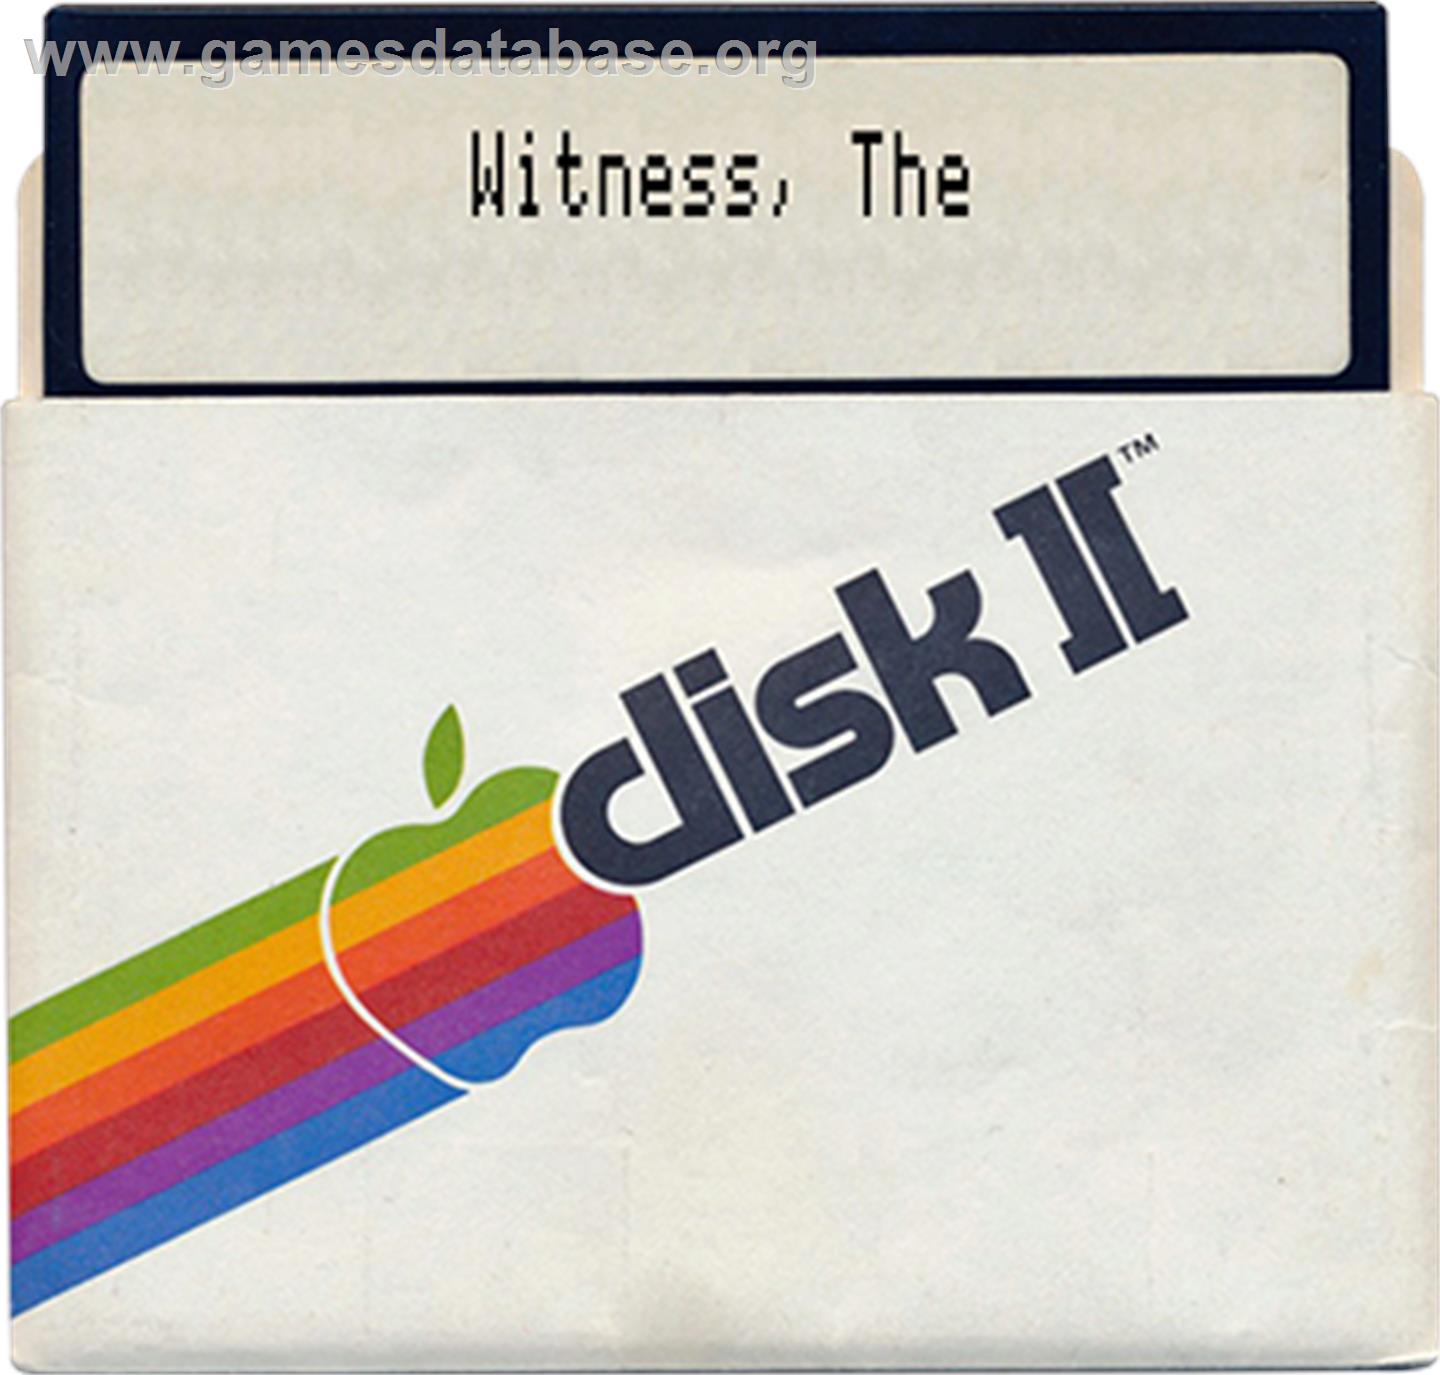 Witness - Apple II - Artwork - Disc